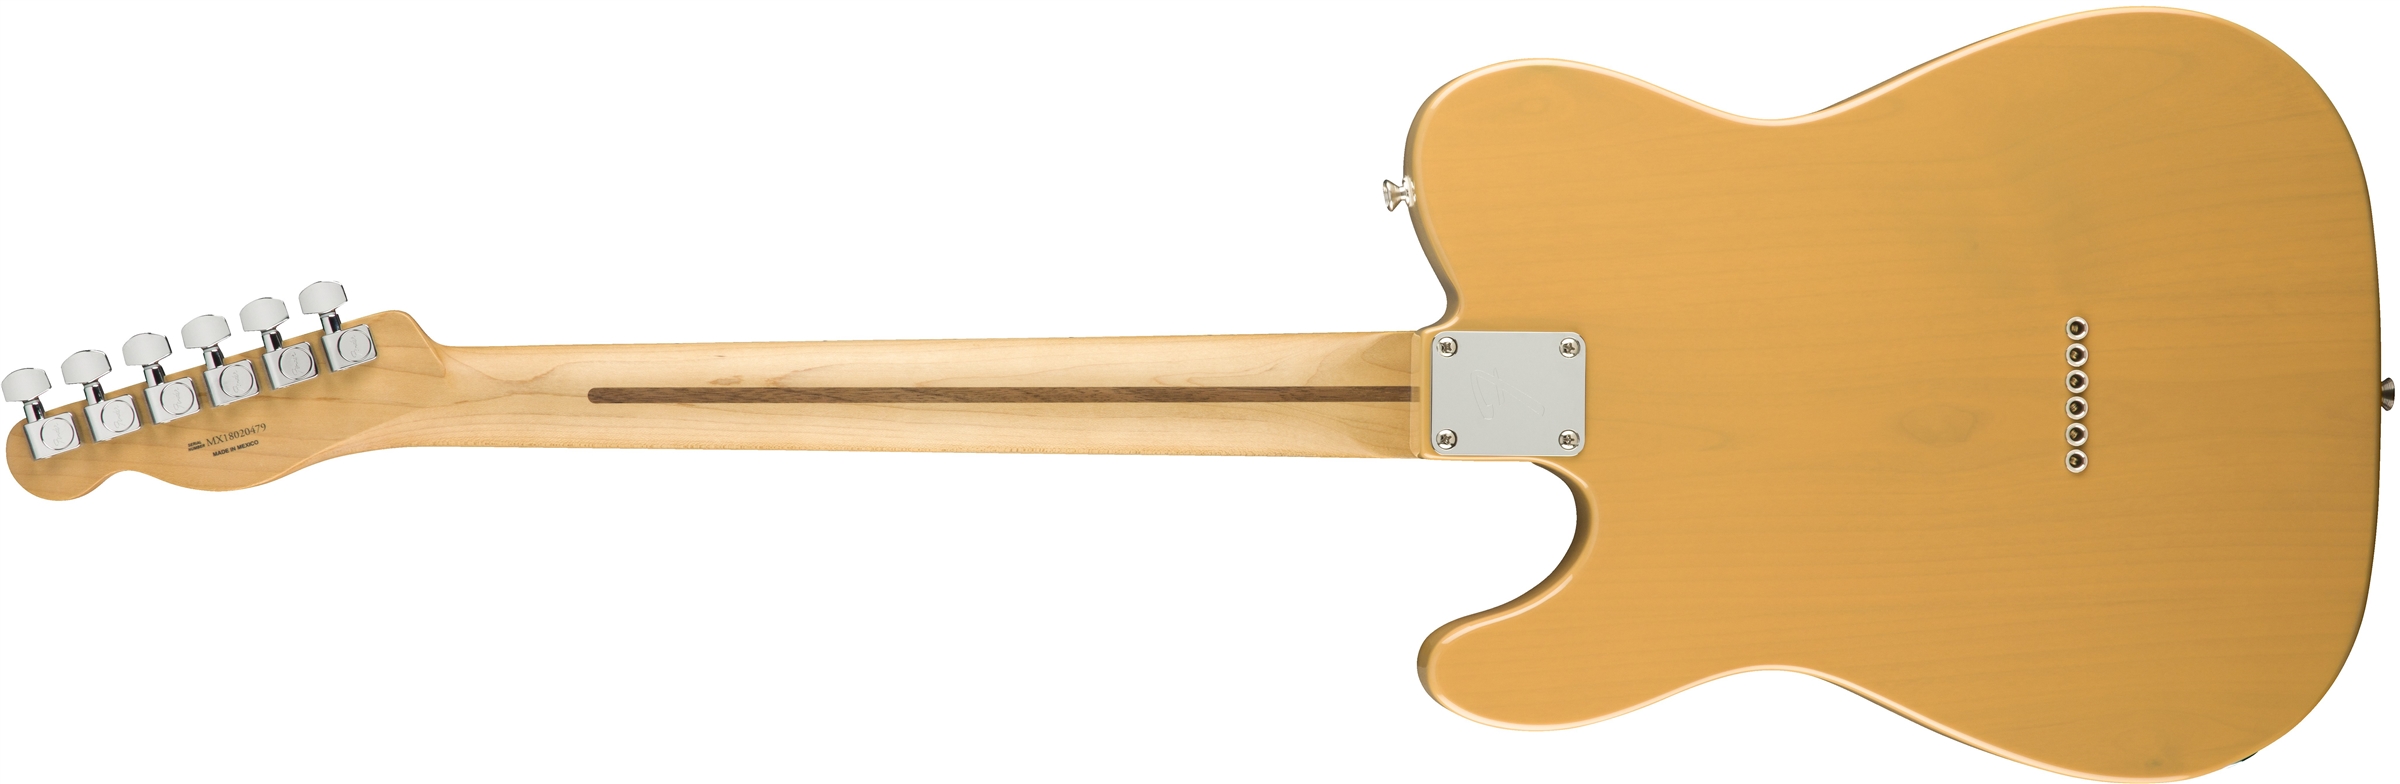 Fender Tele Player Mex Mn - Butterscotch Blonde - E-Gitarre in Teleform - Variation 2